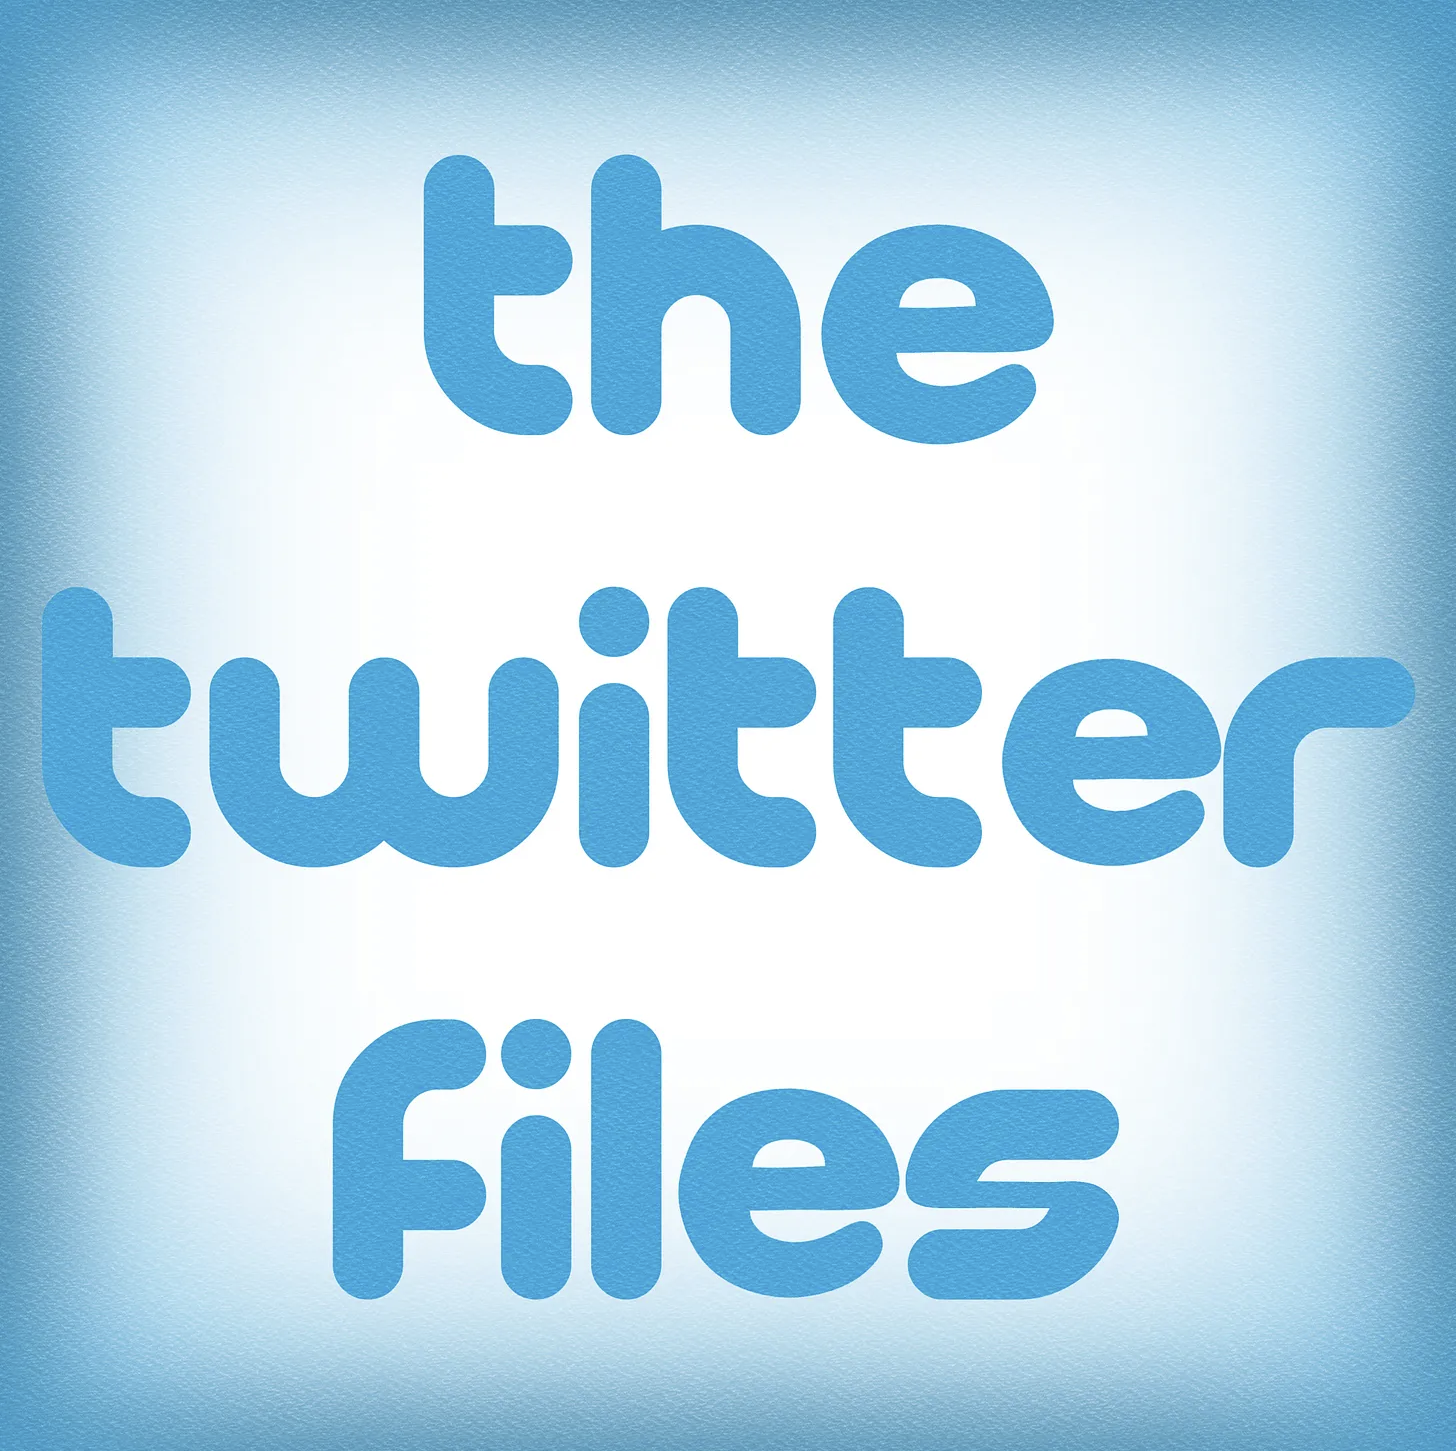 Twitter Files